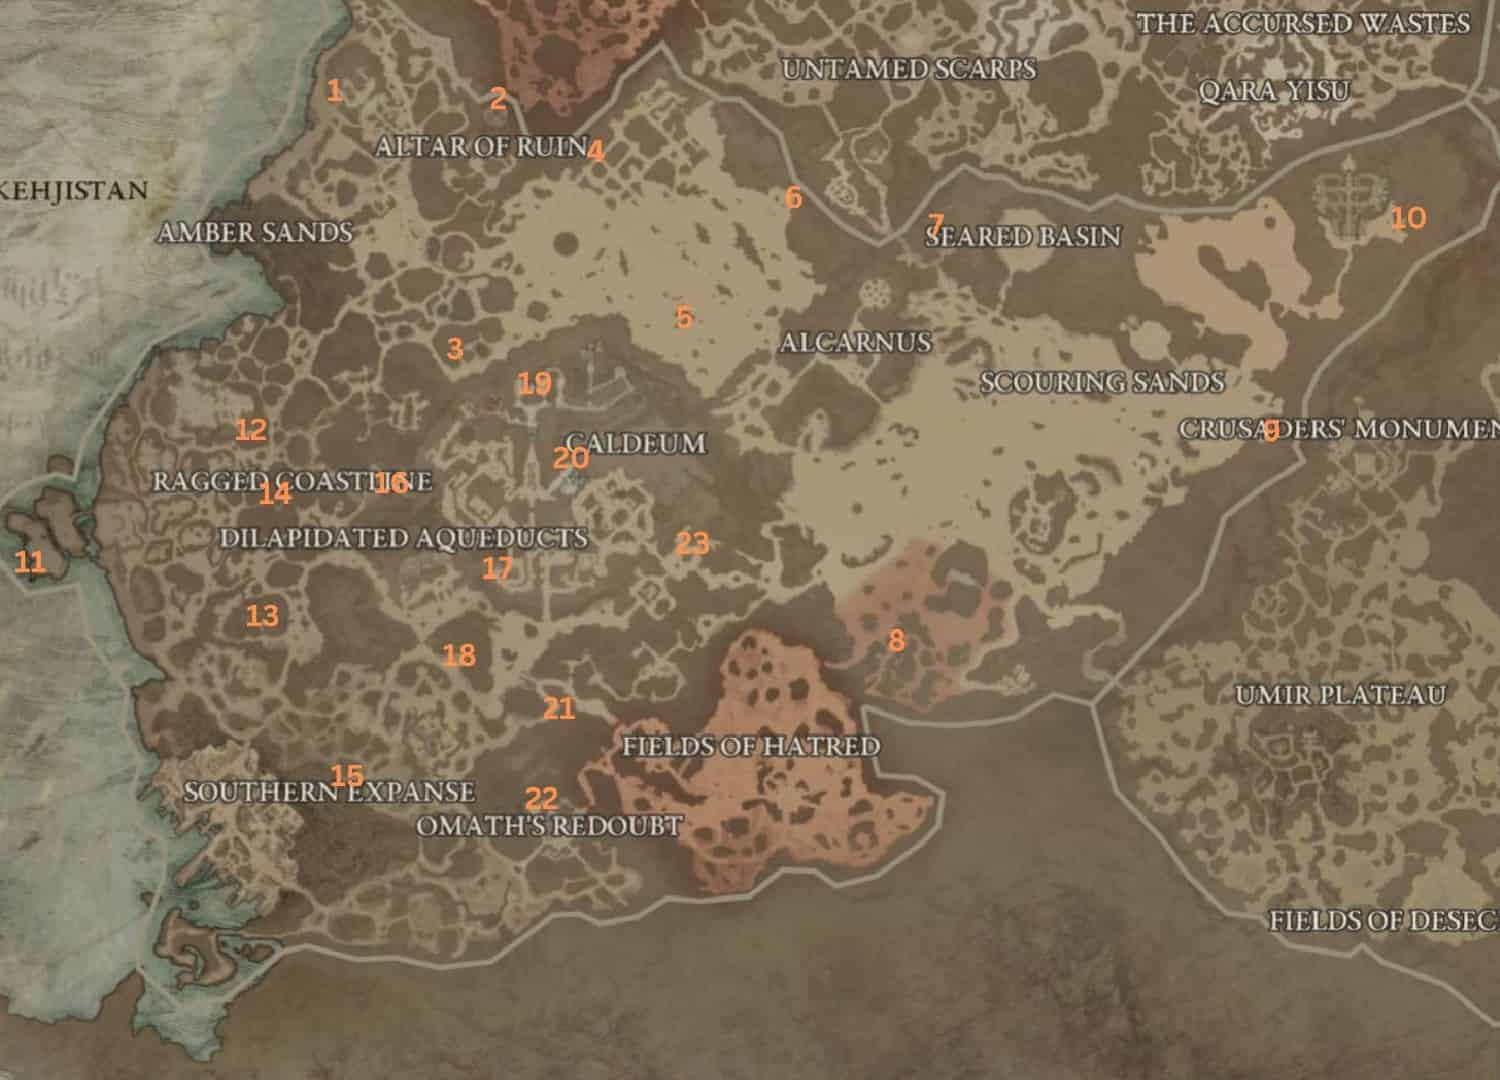 Diablo 4 Dungeons: A map of Diablo 4's Kehjistan region with dungeons marked on it.